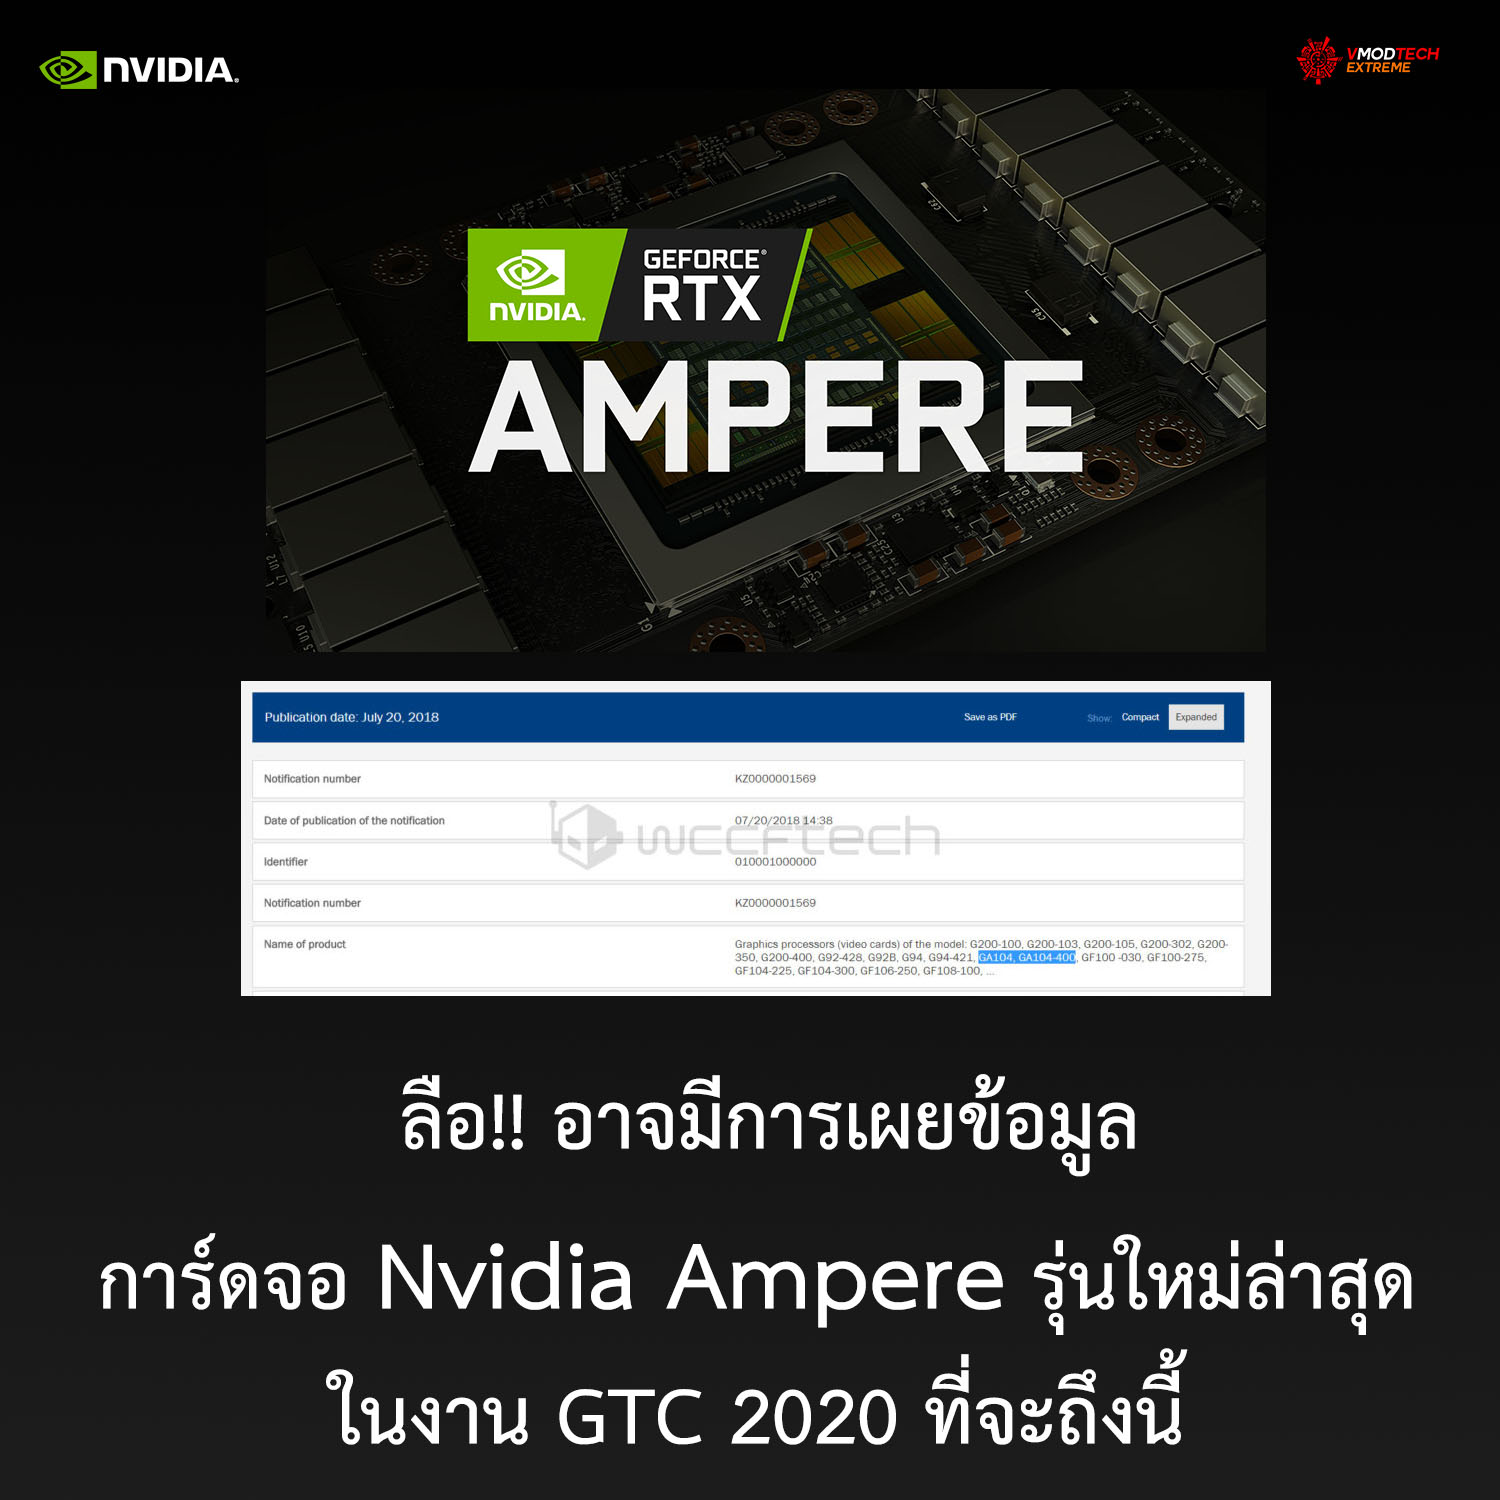 nvidia ampere8 ลือ!! อาจมีการเผยข้อมูลการ์ดจอ Nvidia Ampere รุ่นใหม่ล่าสุดในงาน GTC 2020 ที่จะถึงนี้